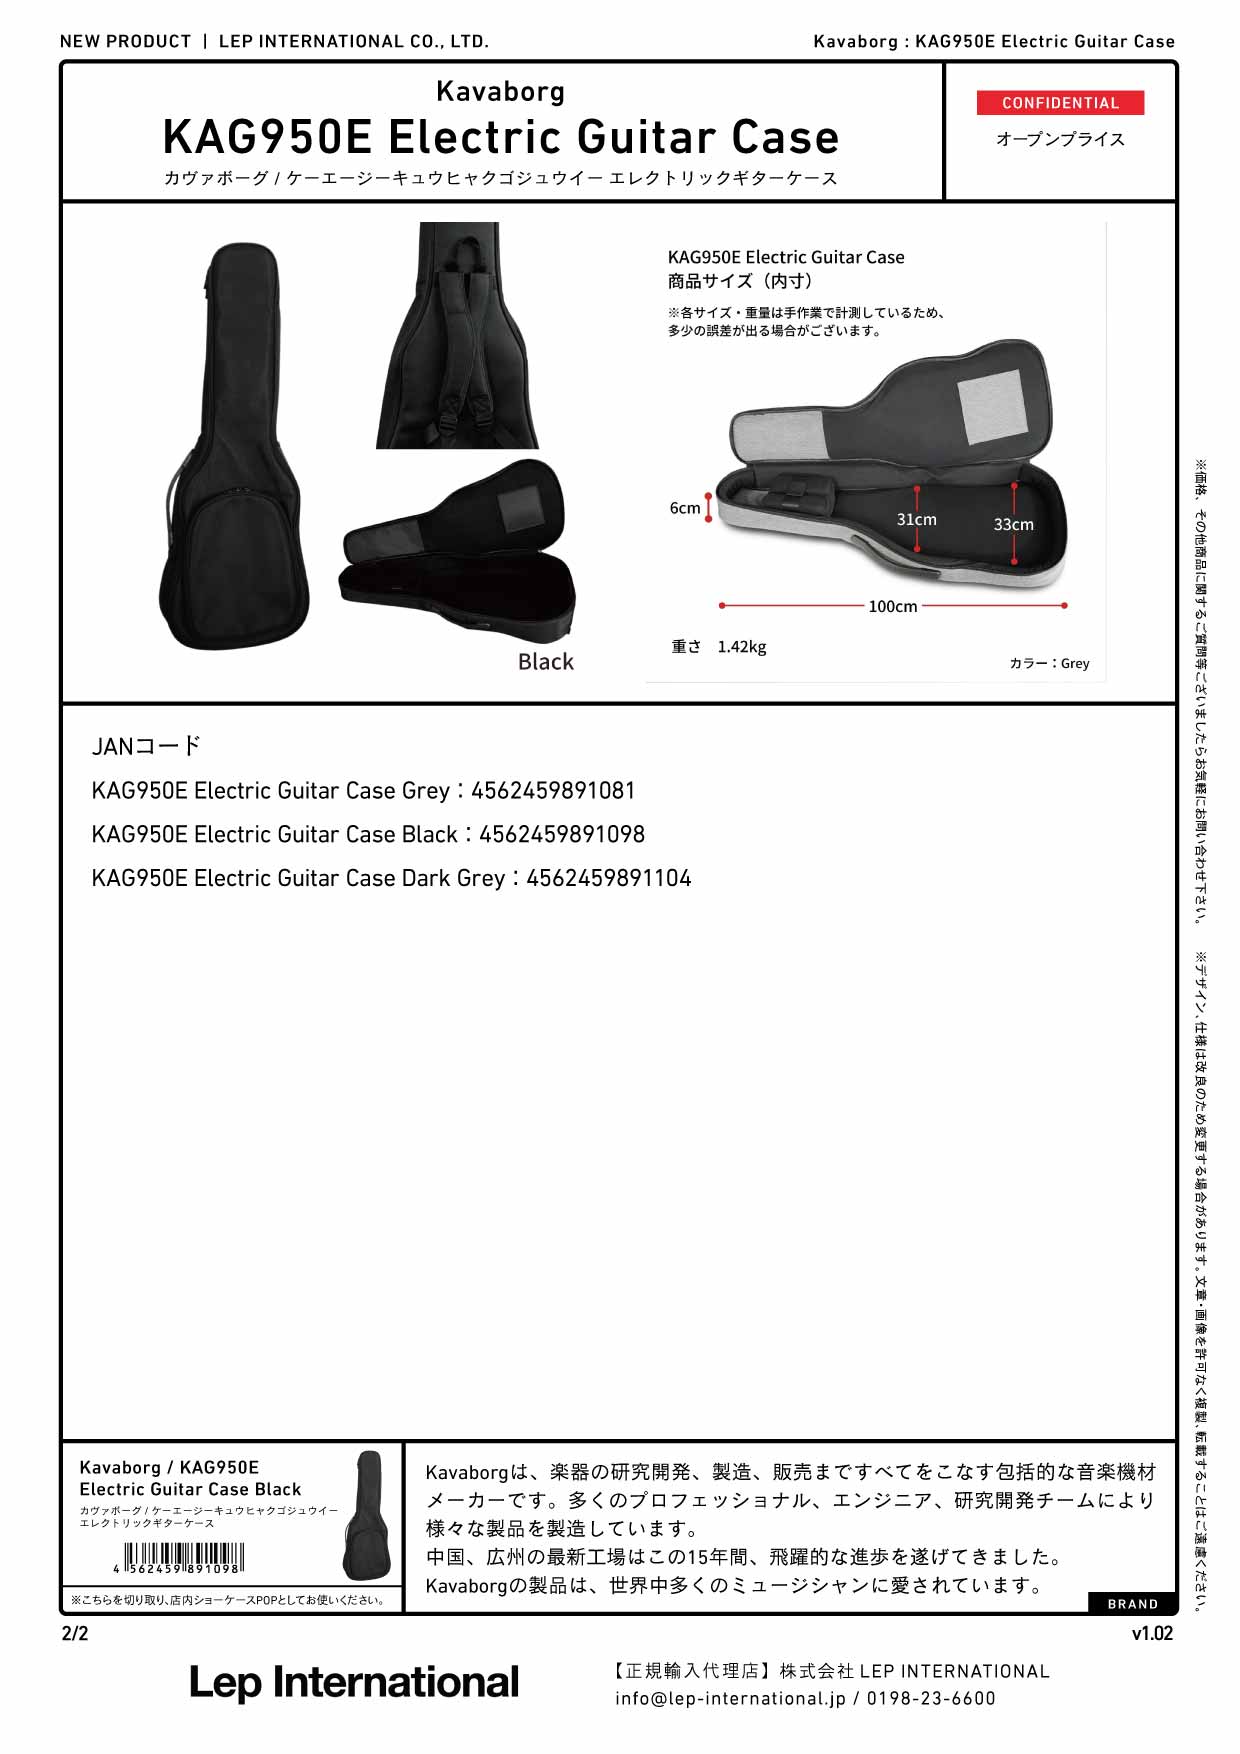 Kavaborg/KAG950E Electric Guitar Case